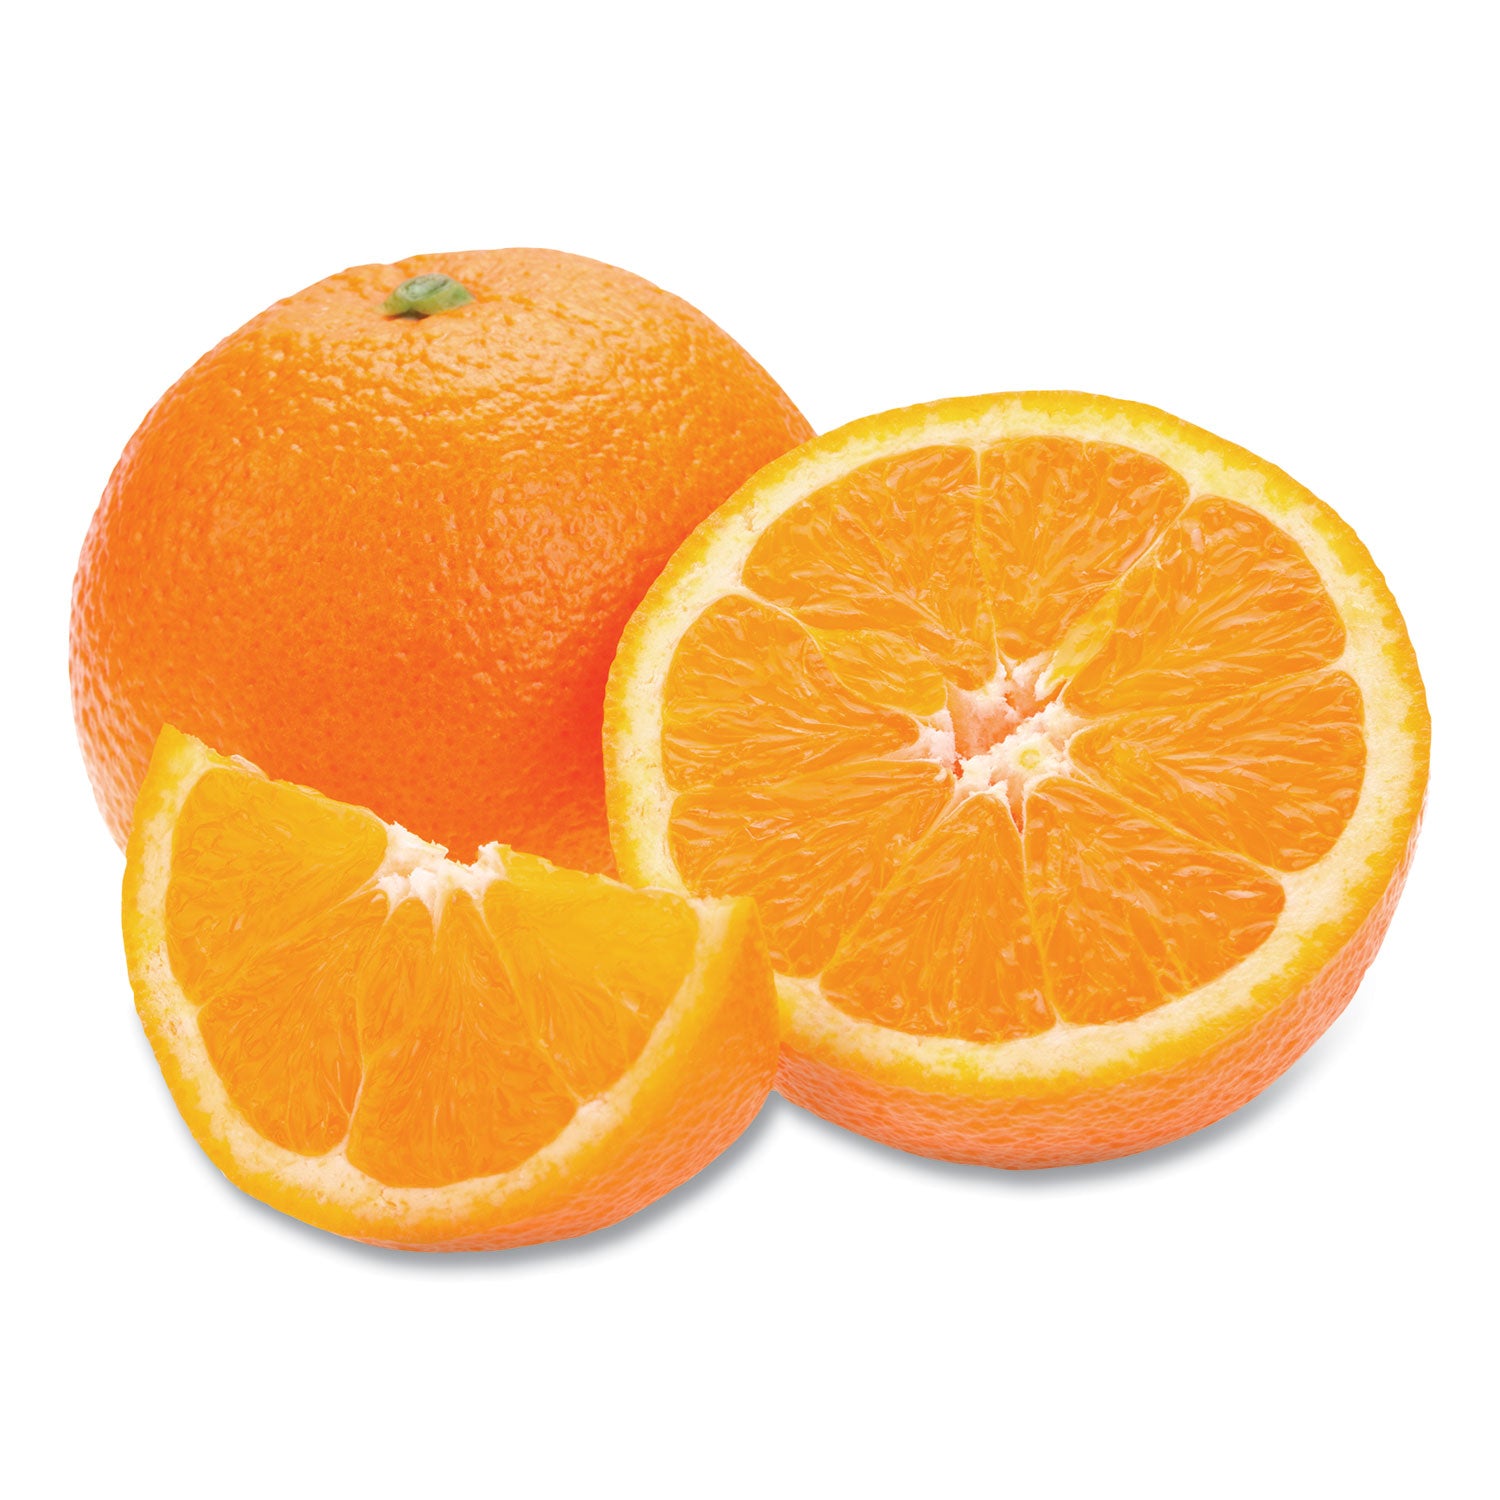 fresh-premium-seedless-oranges-8-lbs-ships-in-1-3-business-days_grr90000081 - 1